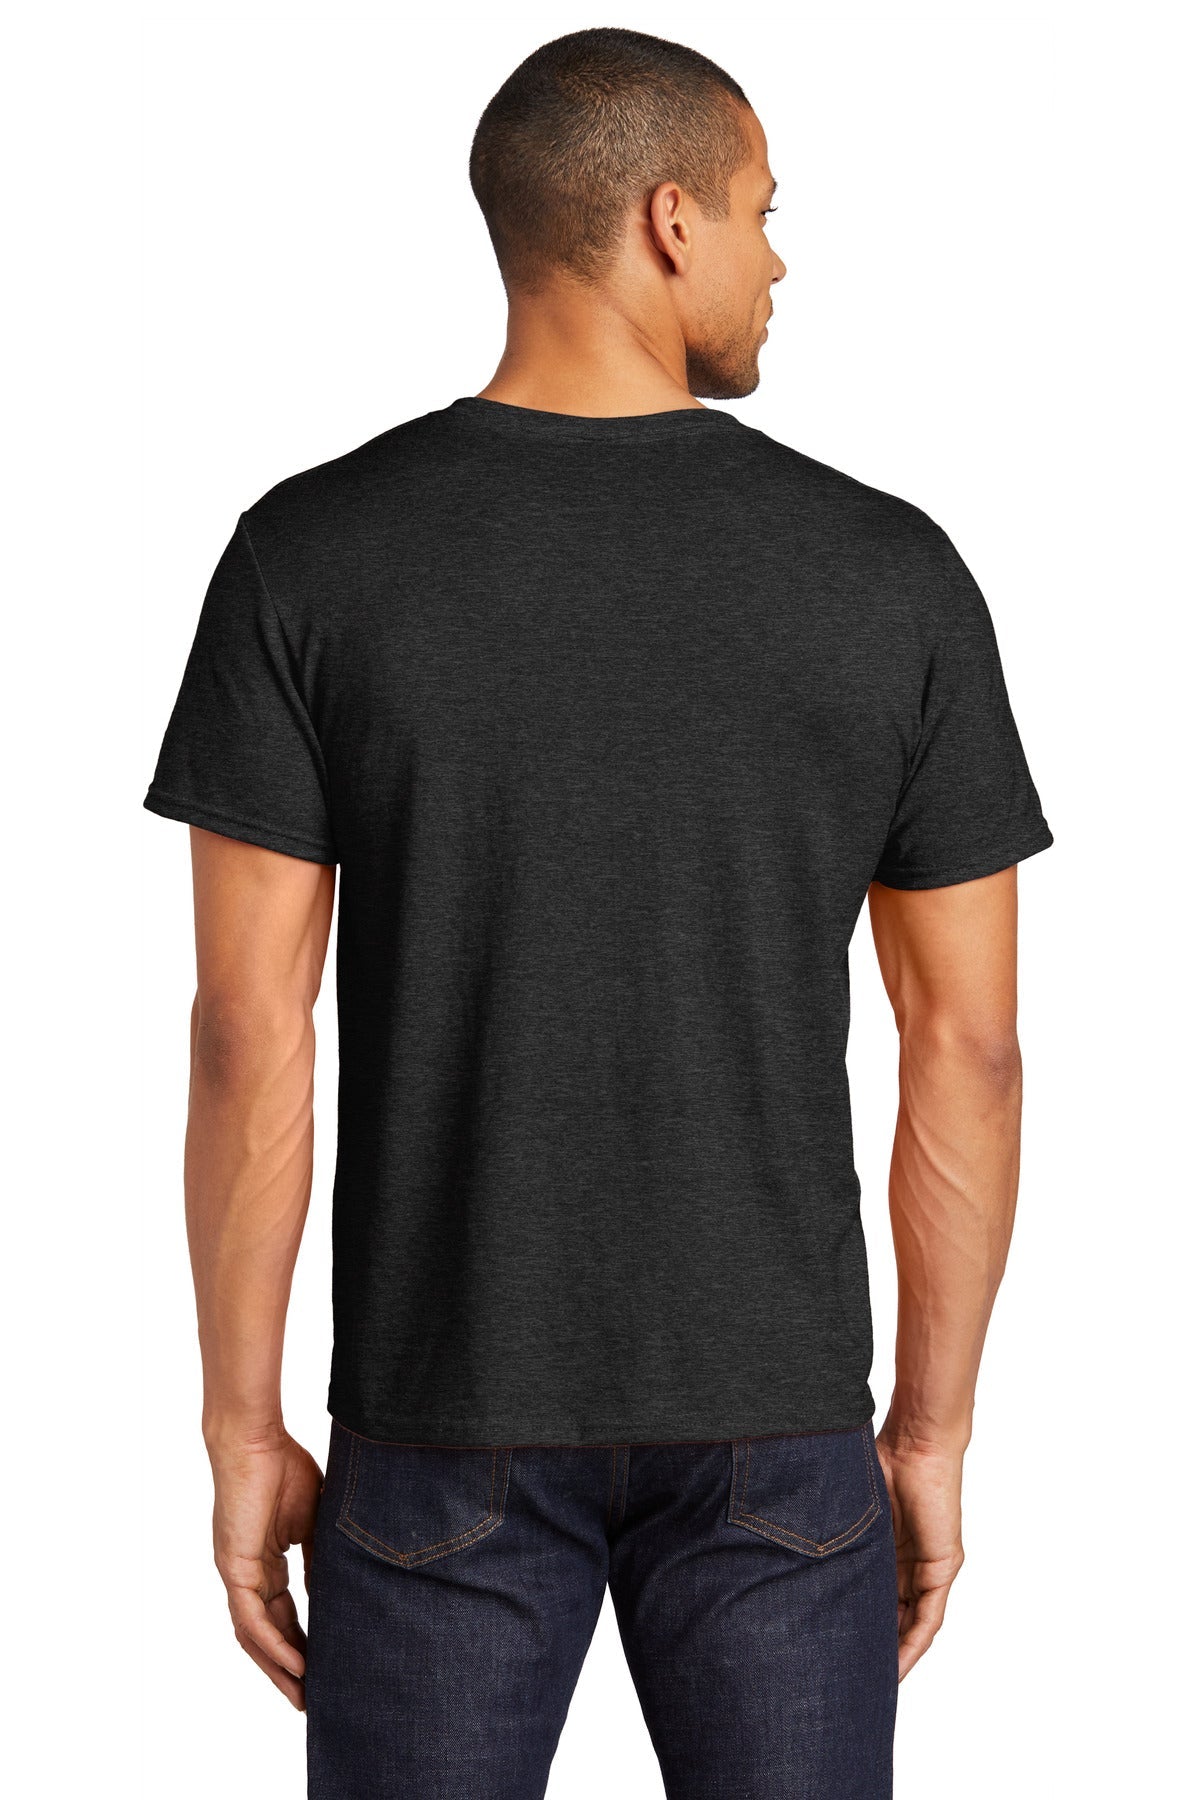 JERZEES® Premium Blend Ring Spun T-Shirt 560M [Black Ink Heather] - DFW Impression